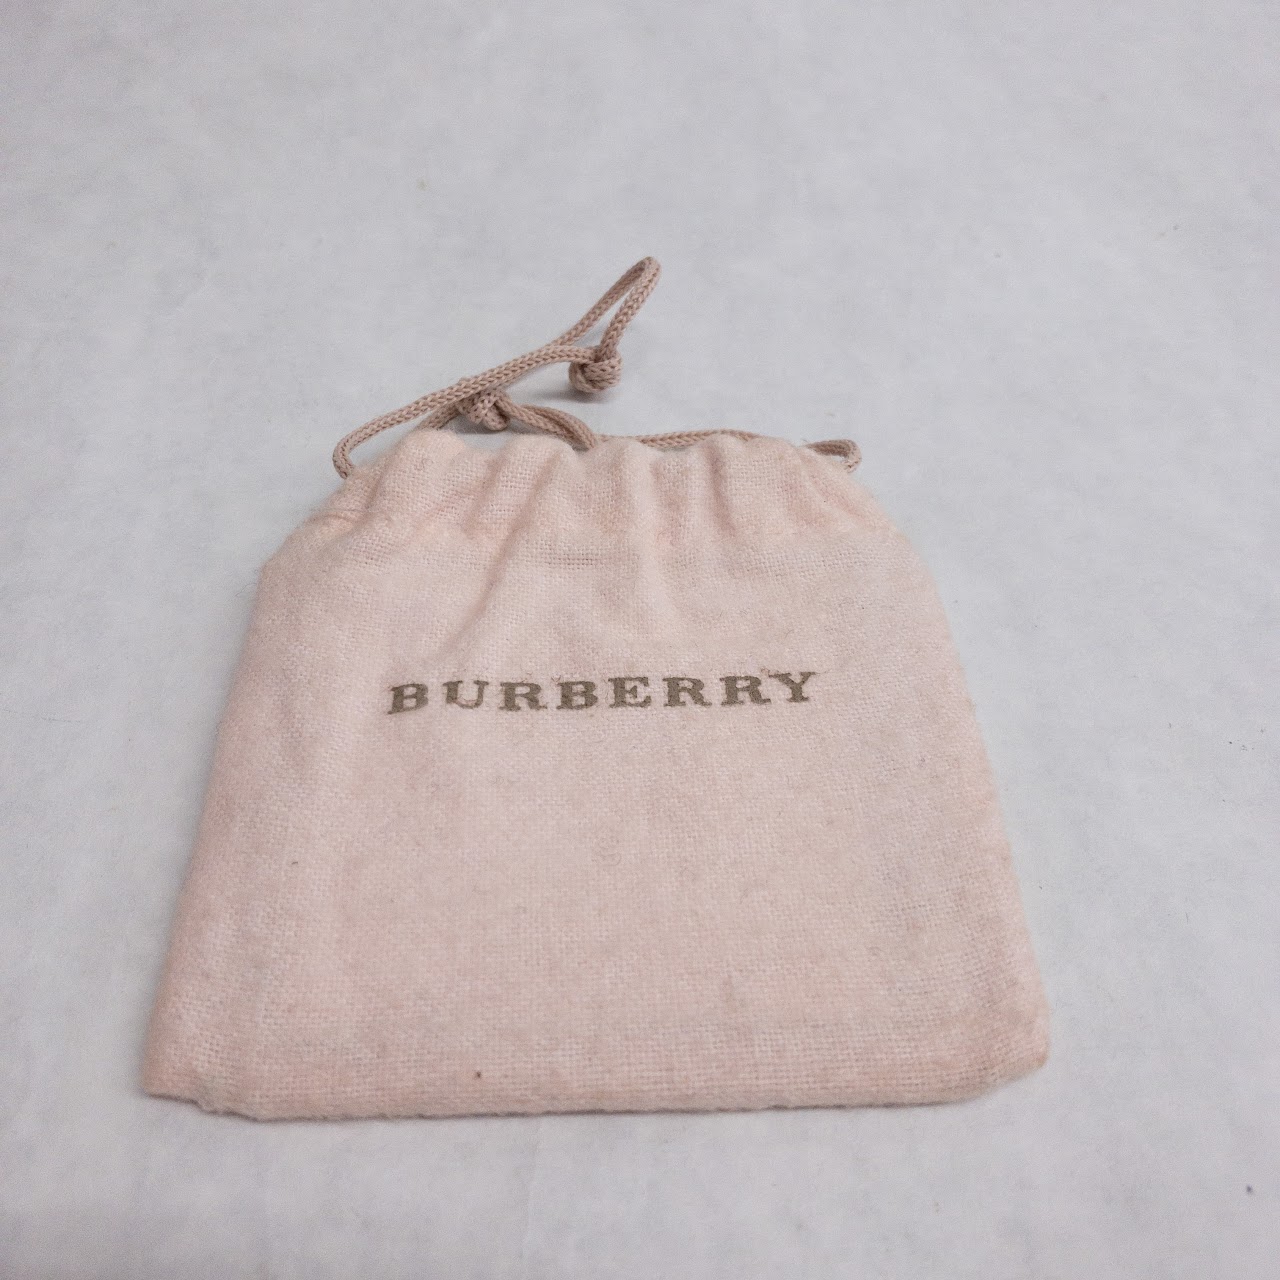 Burberry Pocket Mirror